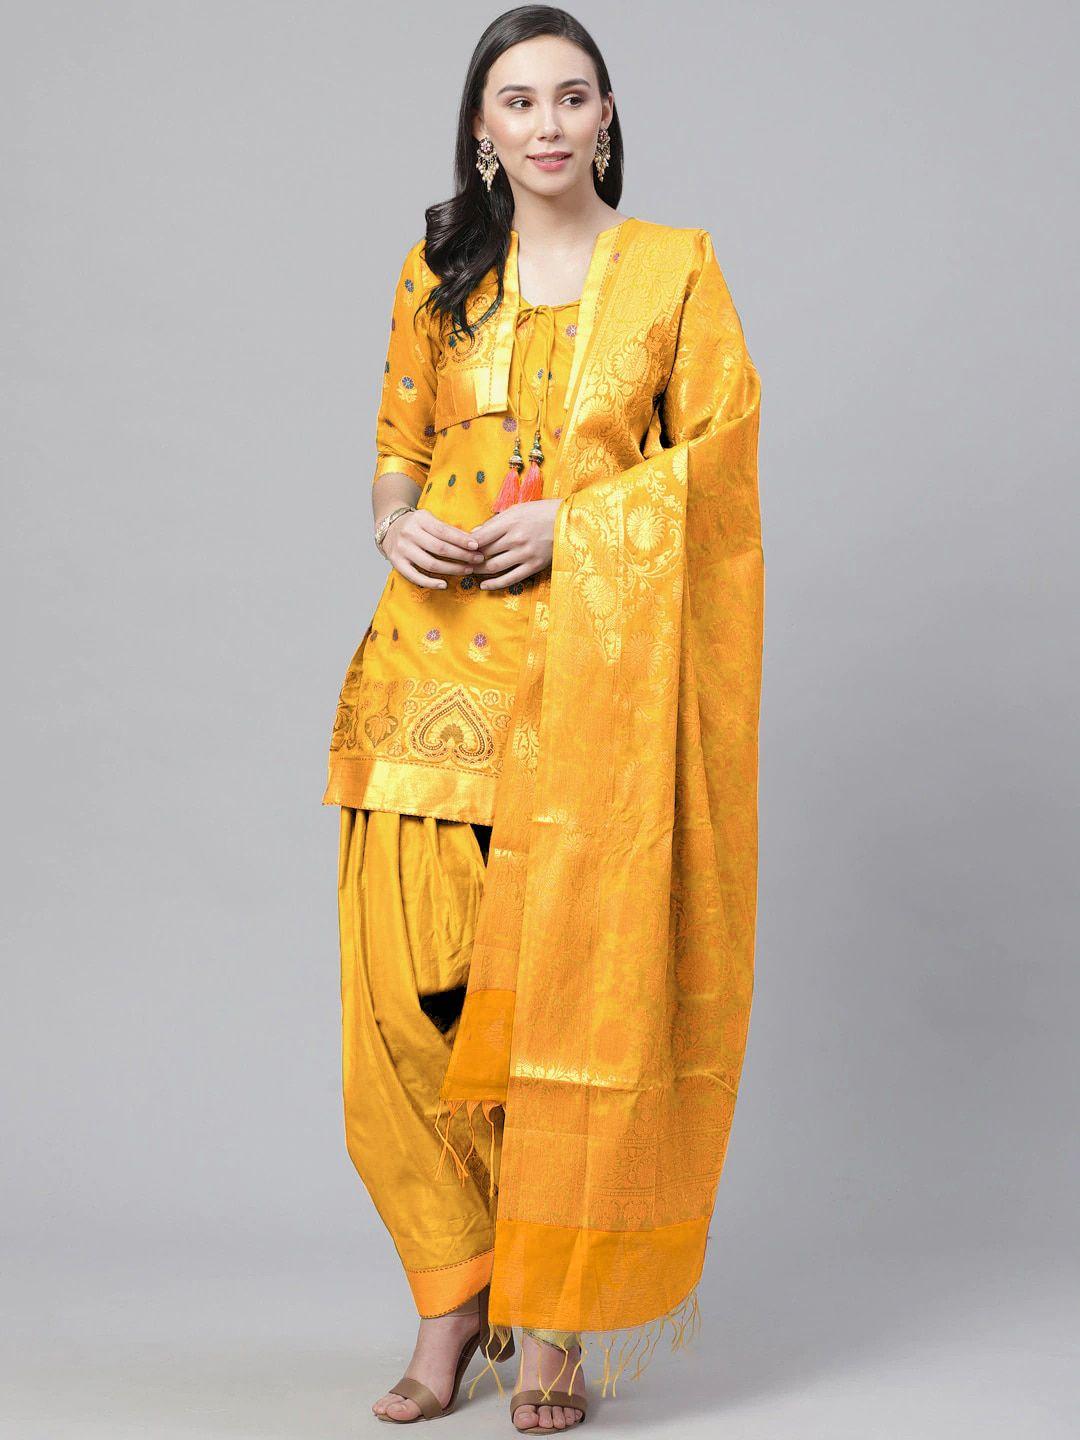 chhabra 555 women mustard yellow ethnic motifs embroidered chanderi cotton kurti with patiala & with dupatta